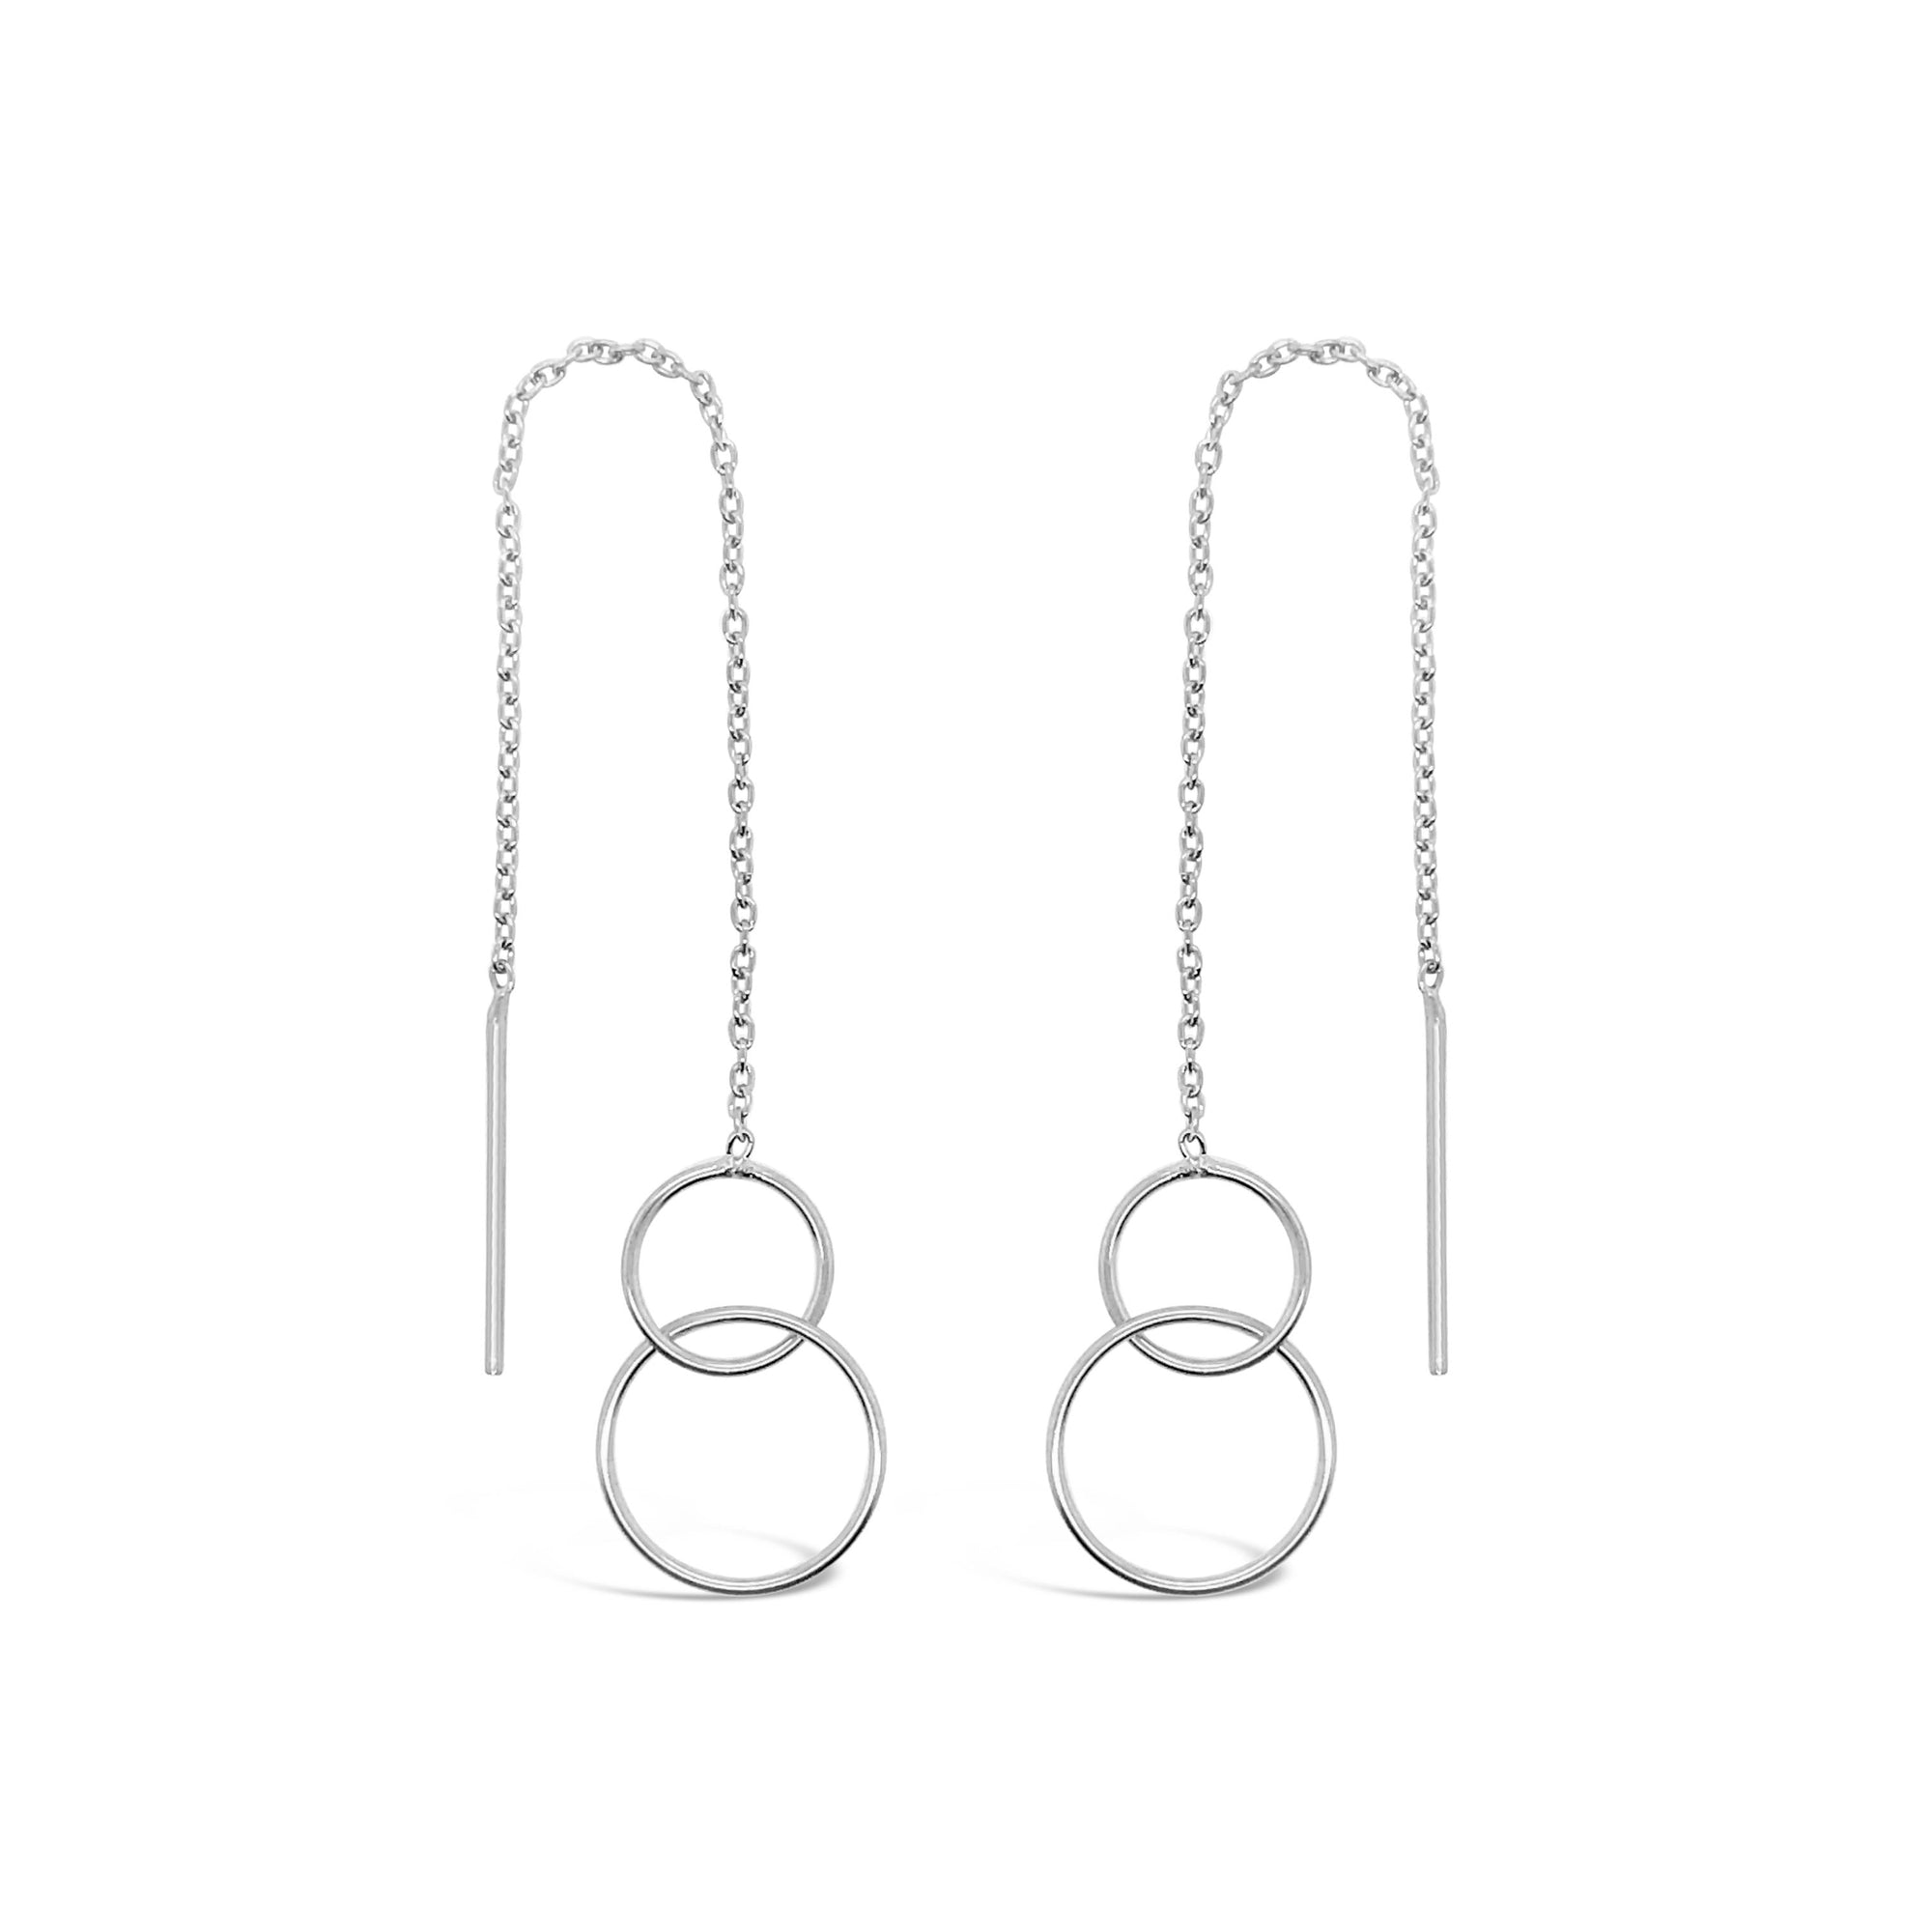 Duo Jewellery Earrings Duo double circle thread earrings